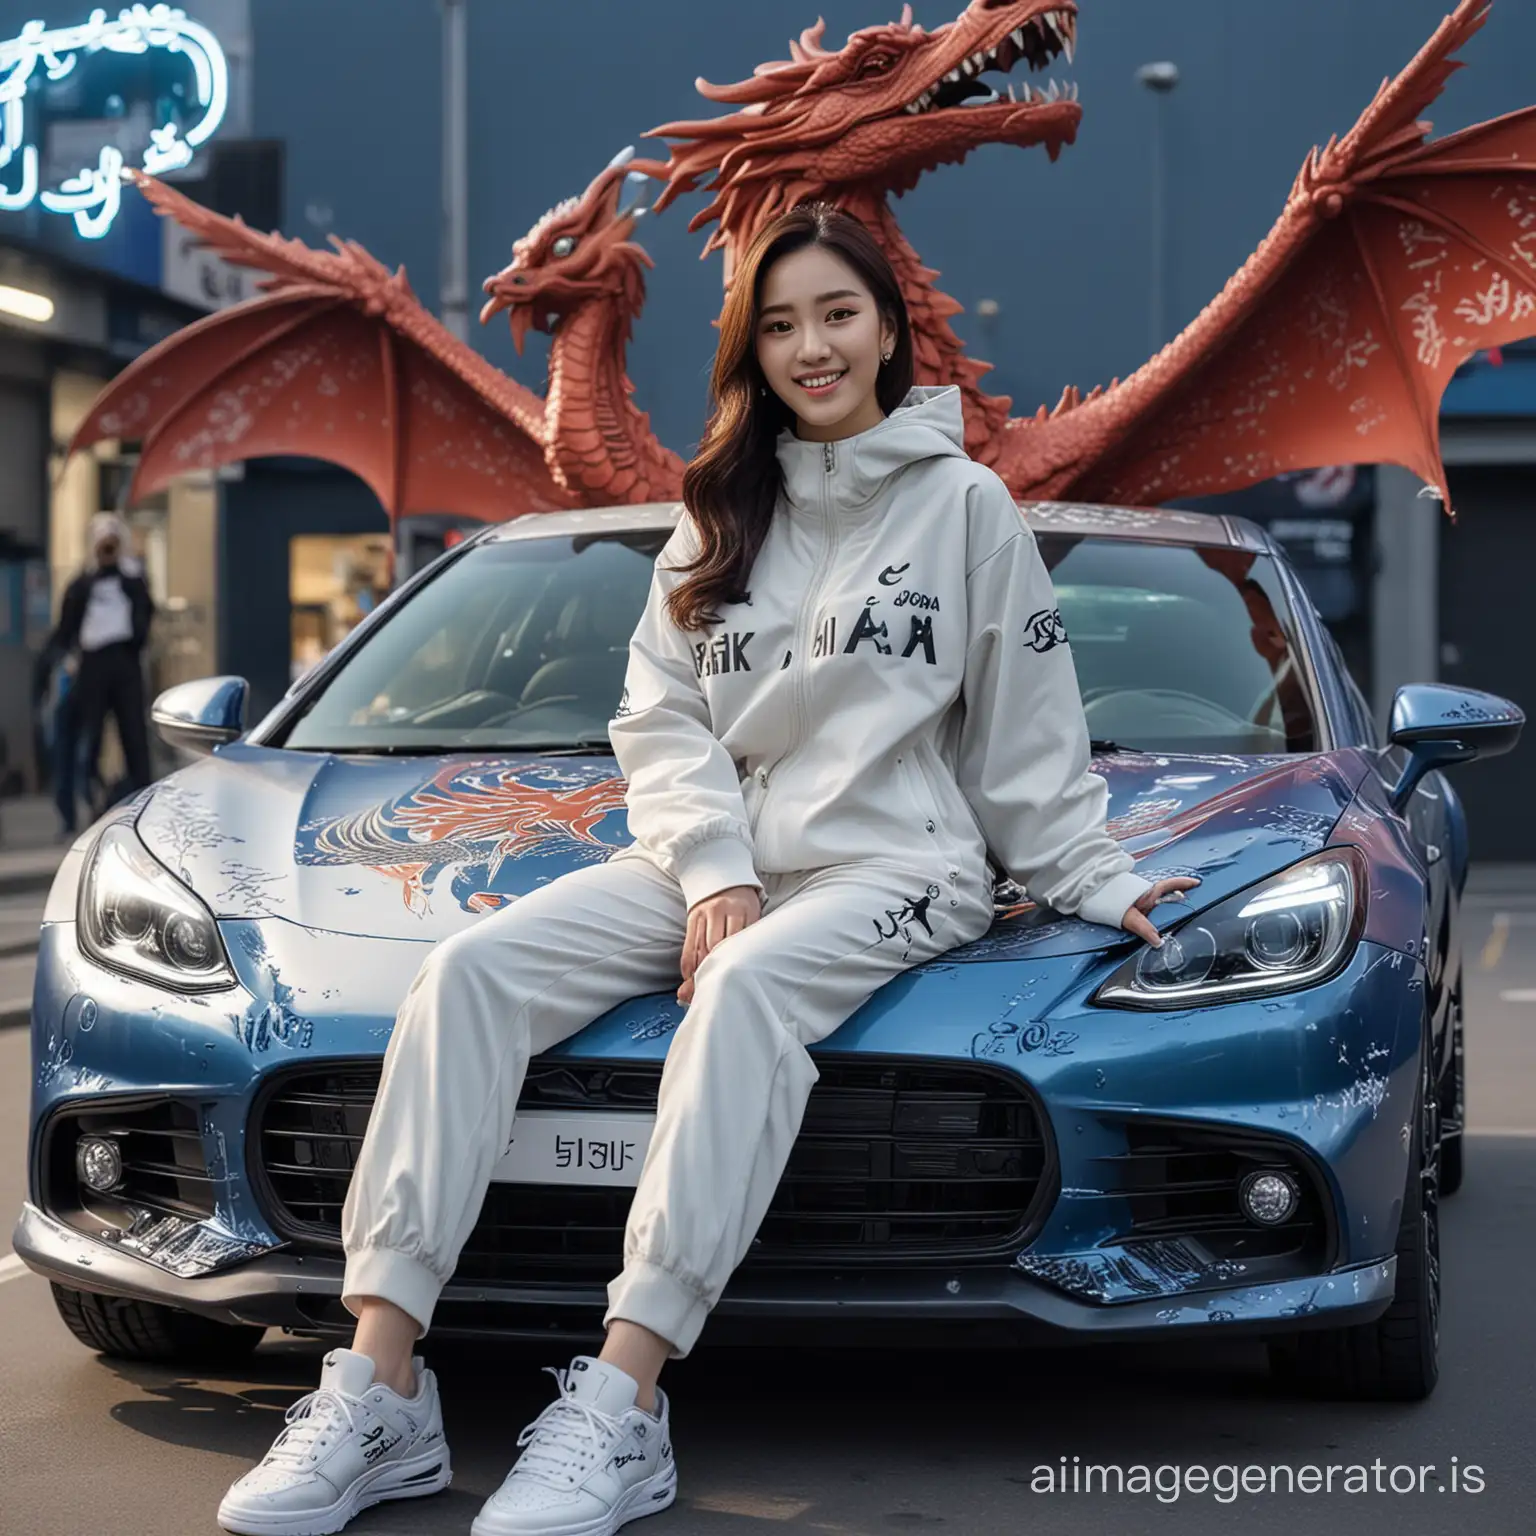 Stylish-Korean-Woman-in-ZACK-CREATOR-Jacket-Poses-on-DragonCar-with-Phoenix-Bird